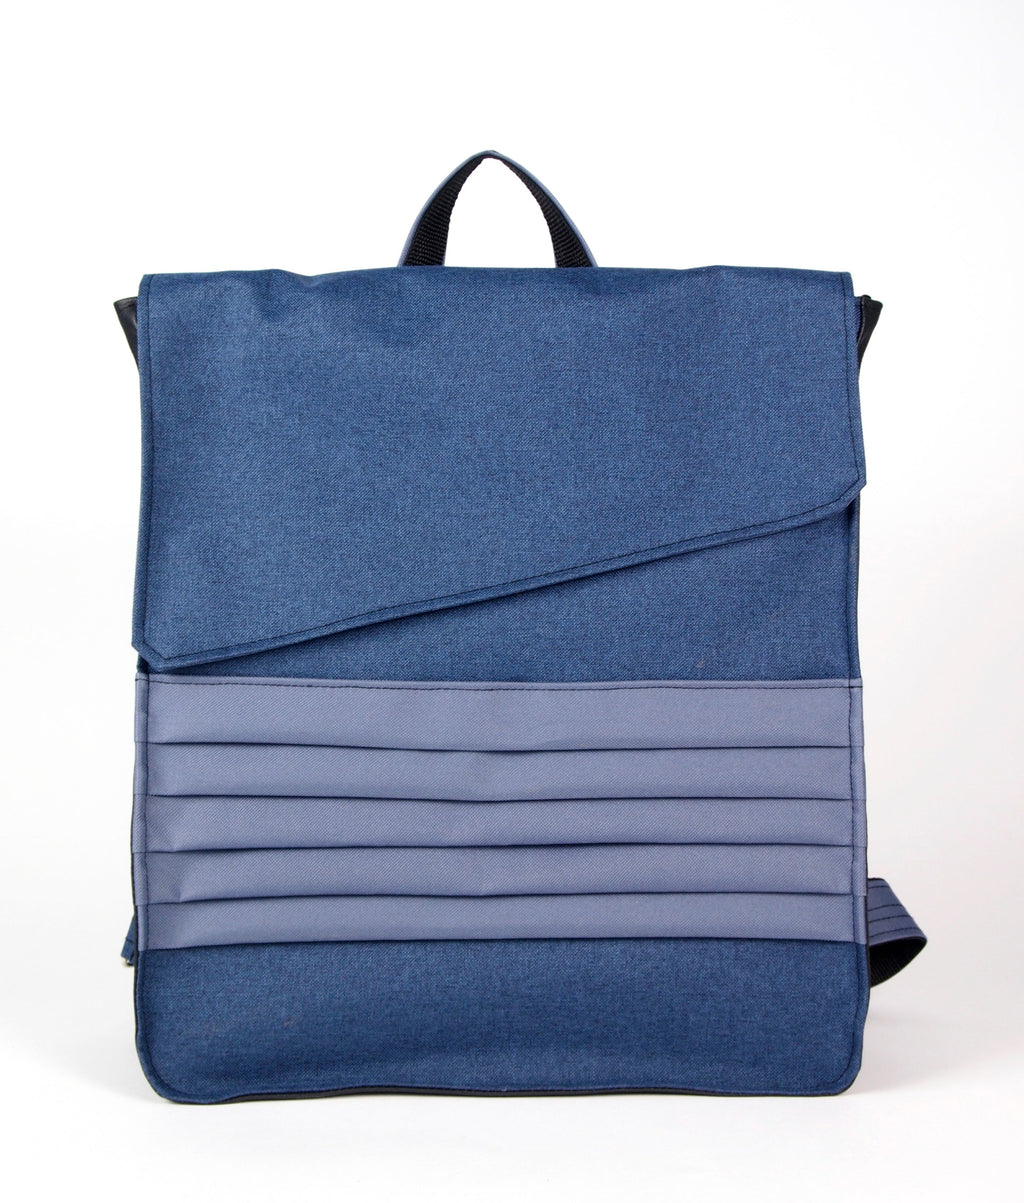 Bardo work backpack - blue - Premium Bardo work backpack from BARDO ART WORKS - Just lvblue, dark blue, handemade, laptop backpack, unisex, vegan leather, water proof, work160! Shop now at BARDO ART WORKS